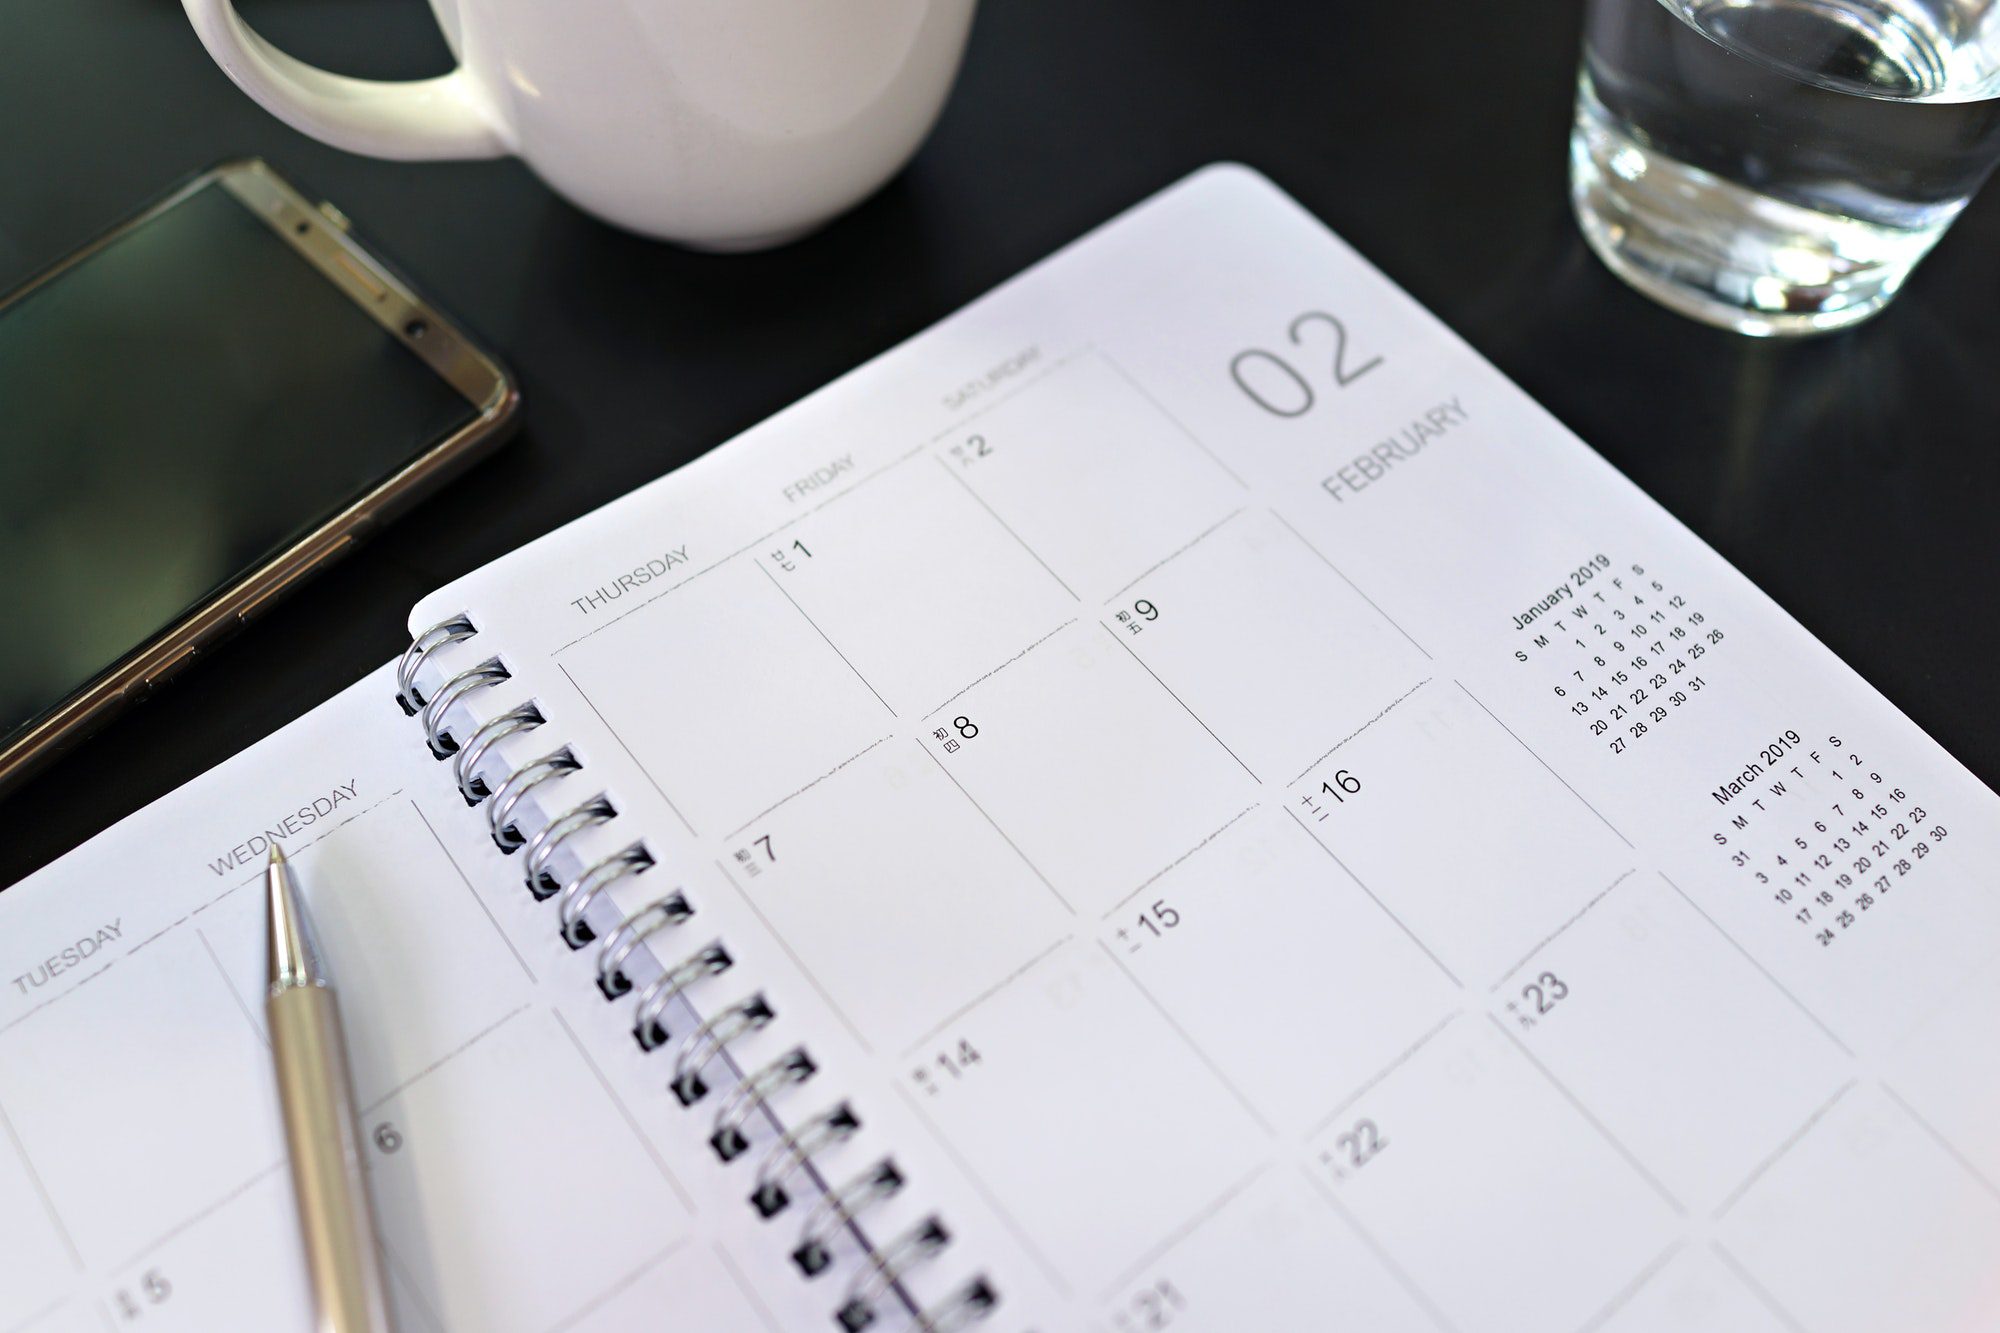 Calendar planner and mobile phone on desk